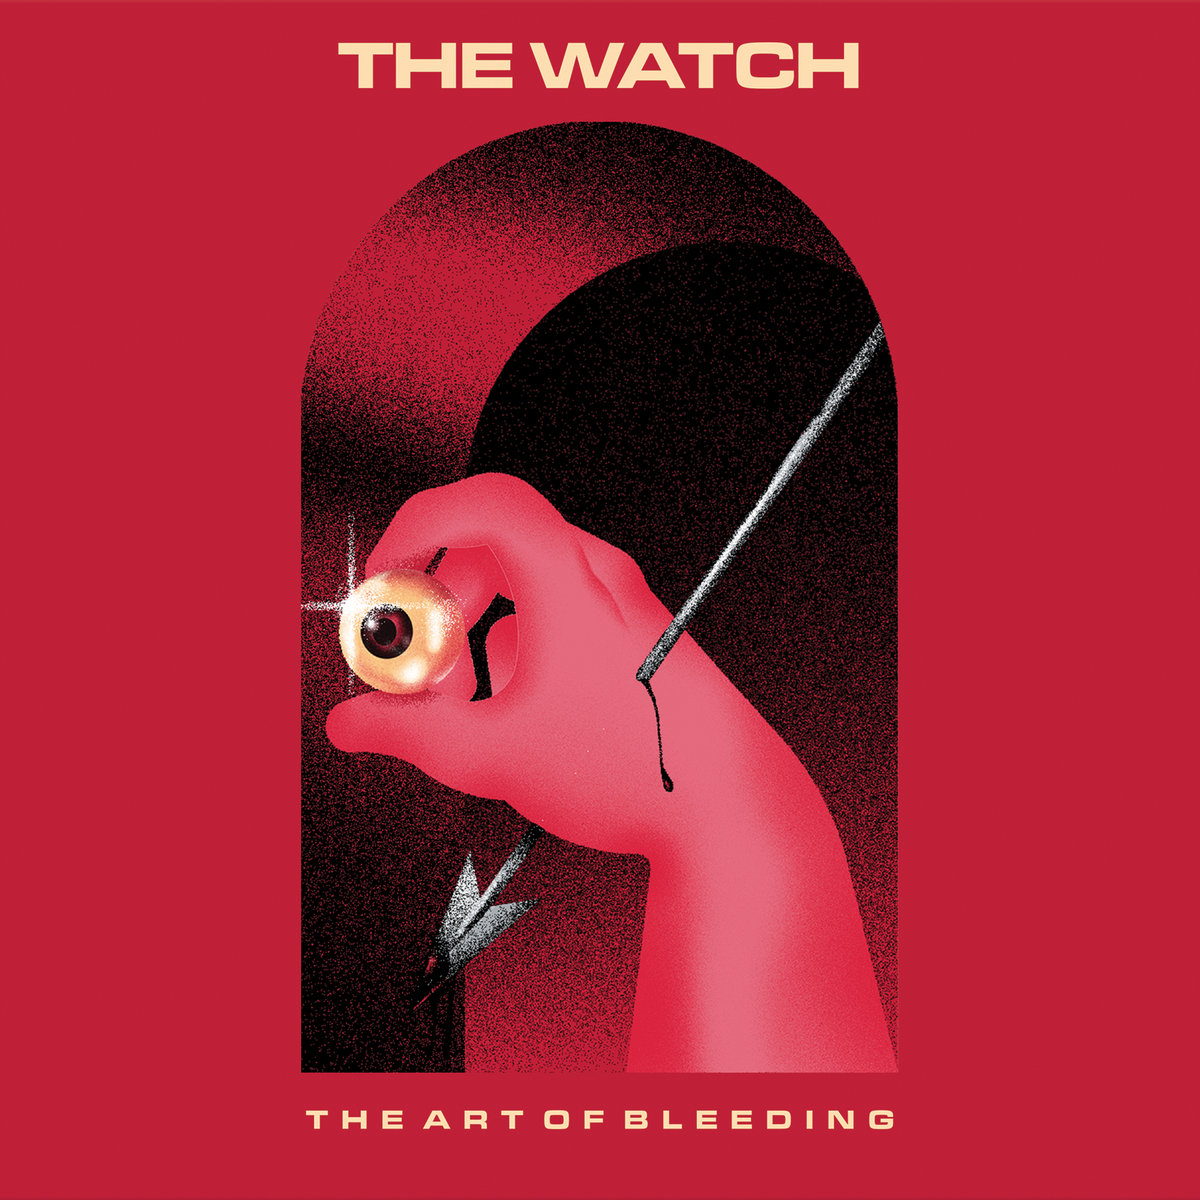 The Watch: The Art of Bleeding